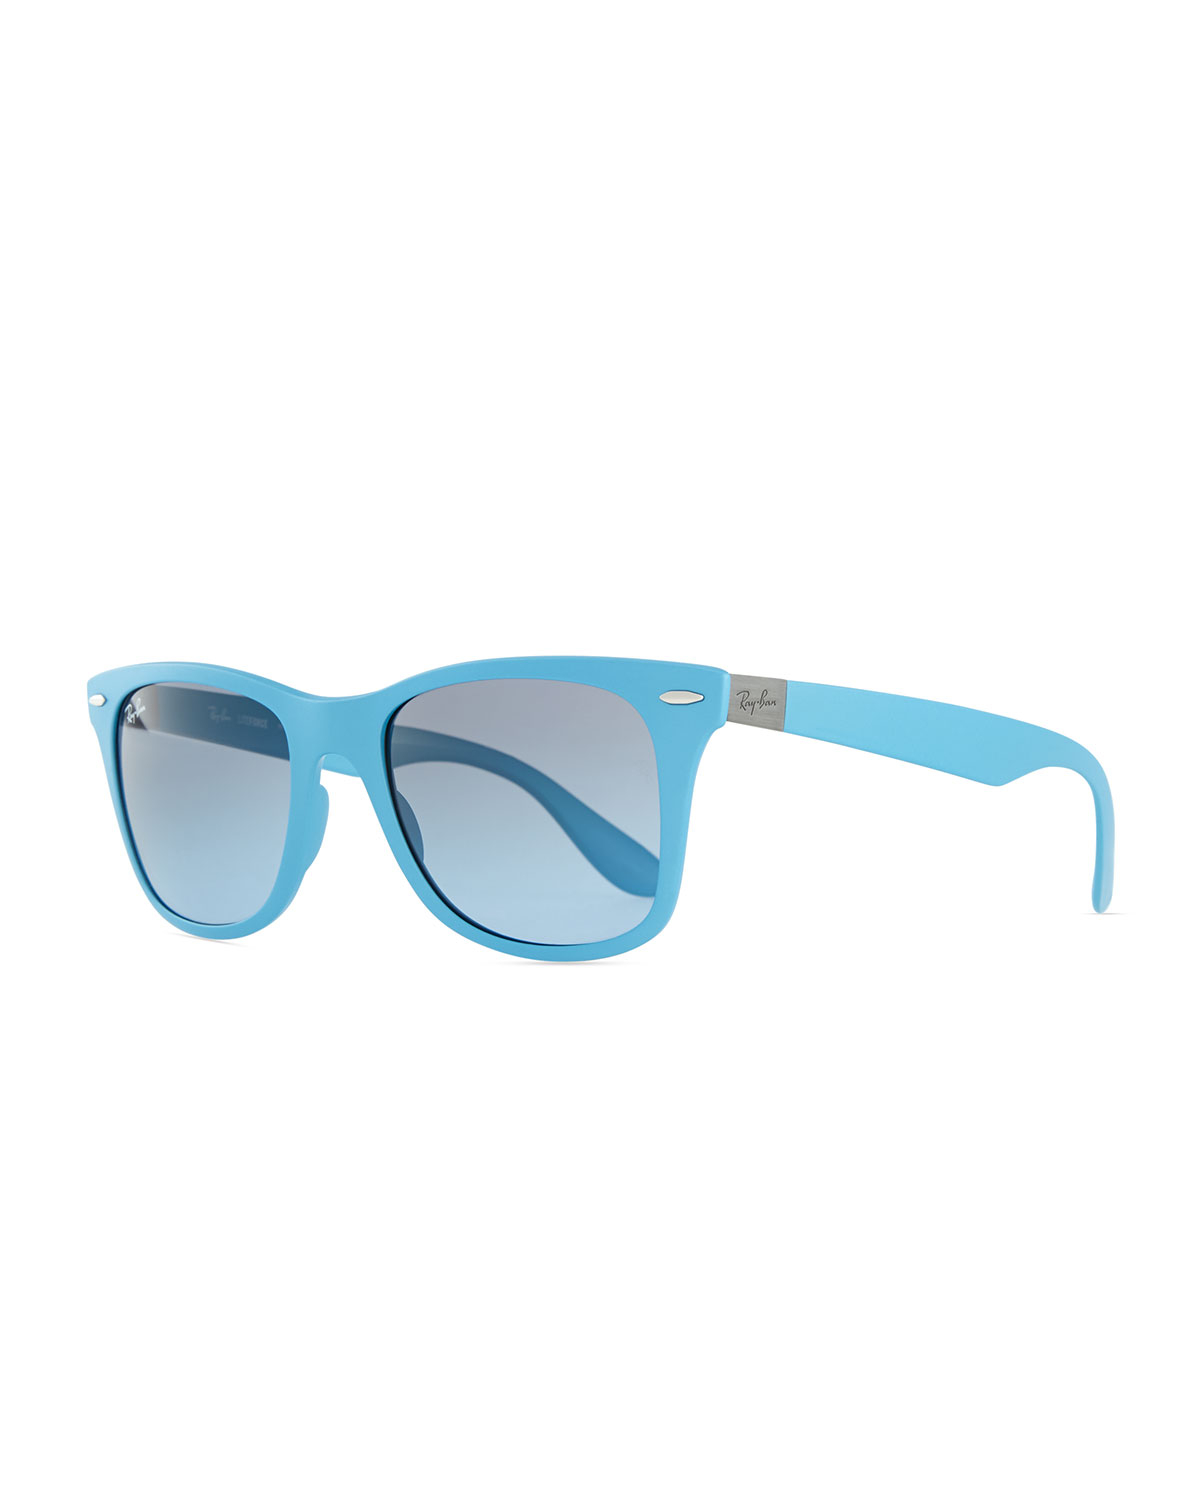 Ray-Ban Liteforce Tech Wayfarer Sunglasses Light Blue for Men - Lyst